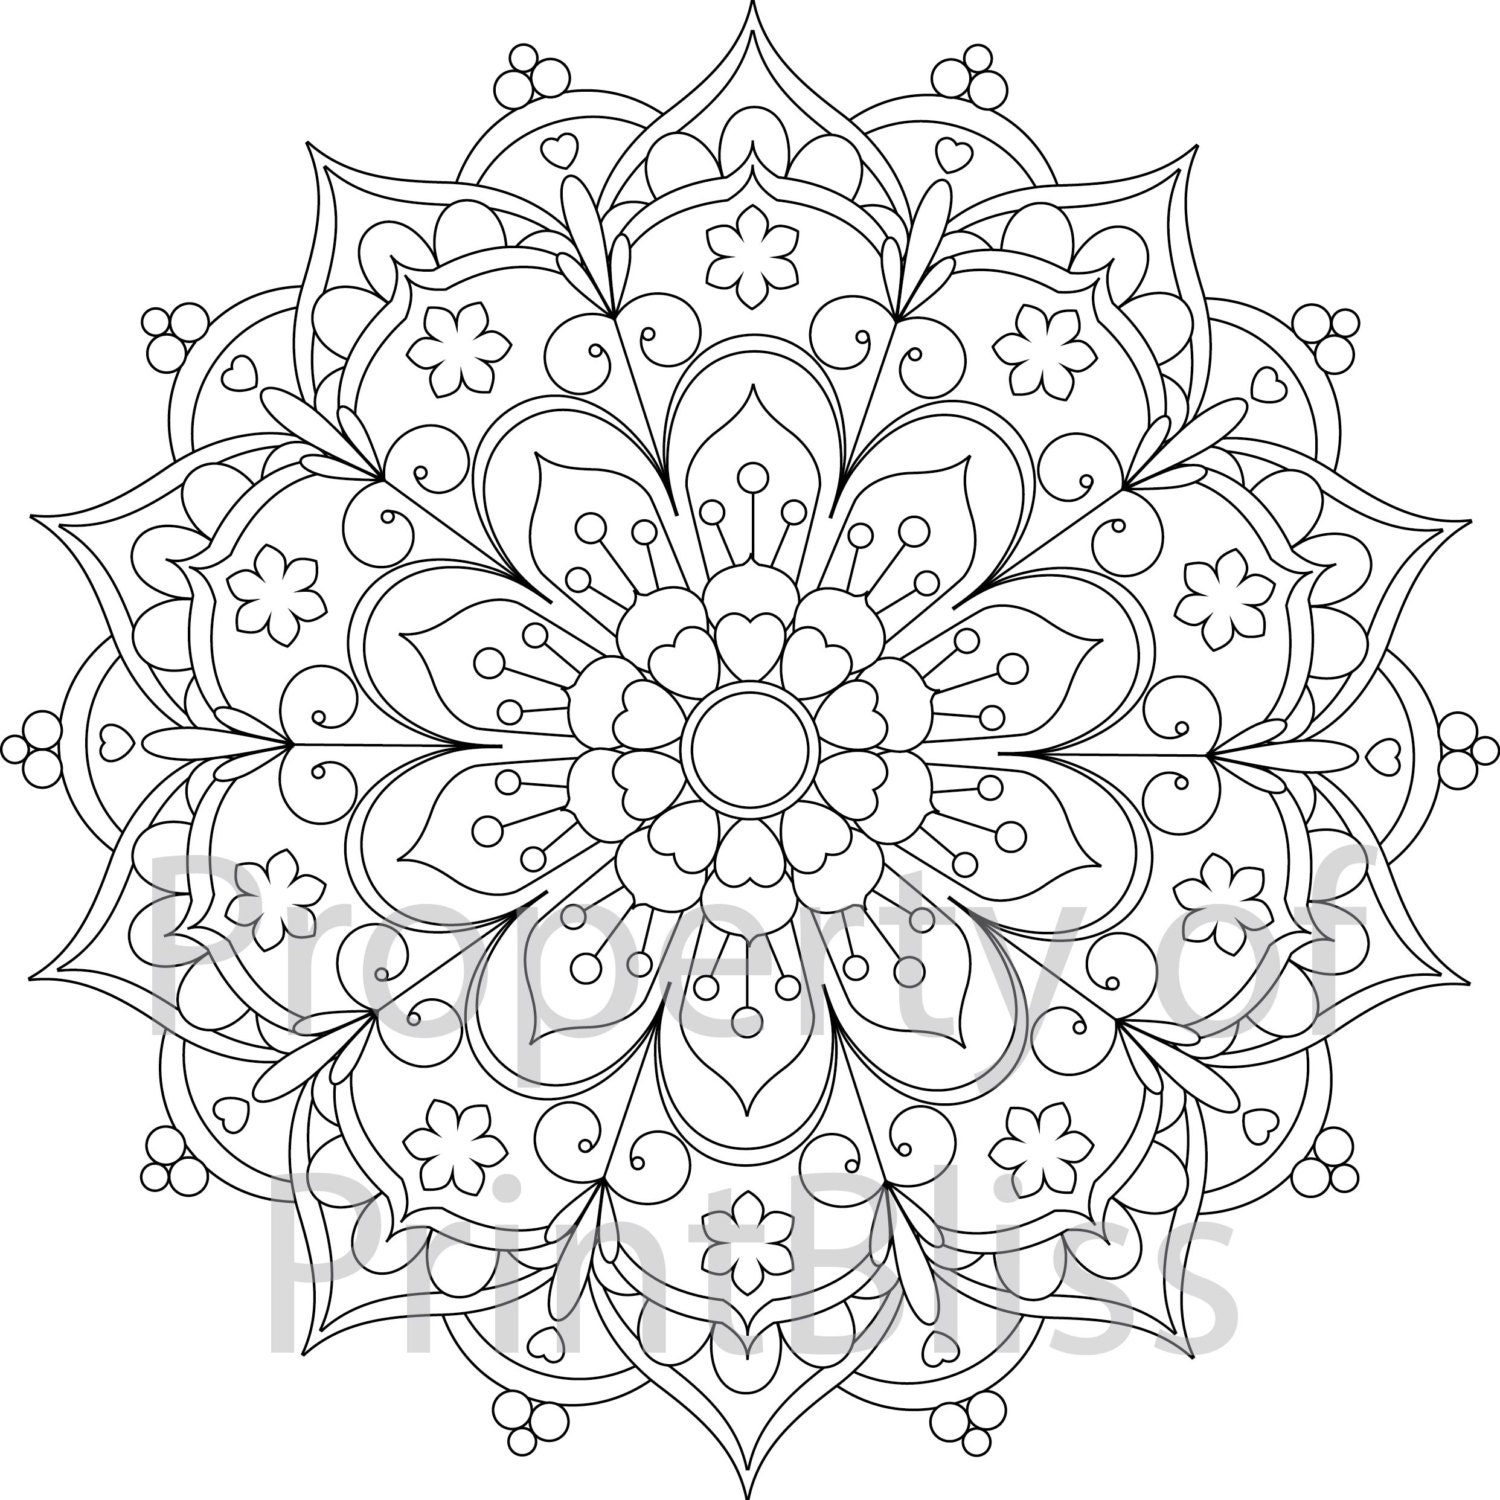 20. Flower Mandala printable coloring page.